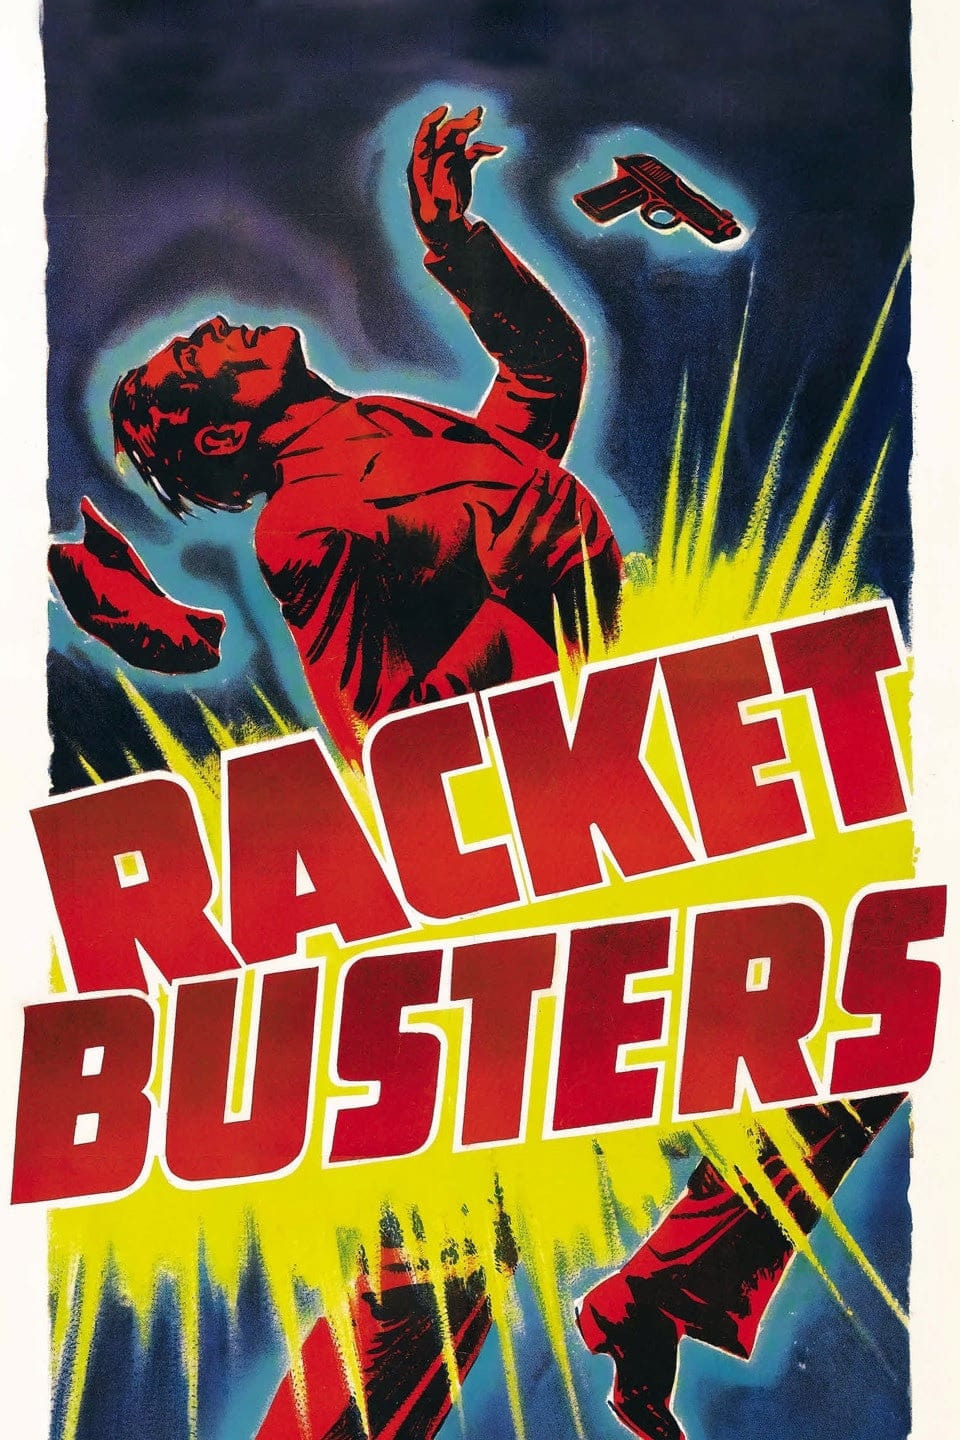 Racket Busters